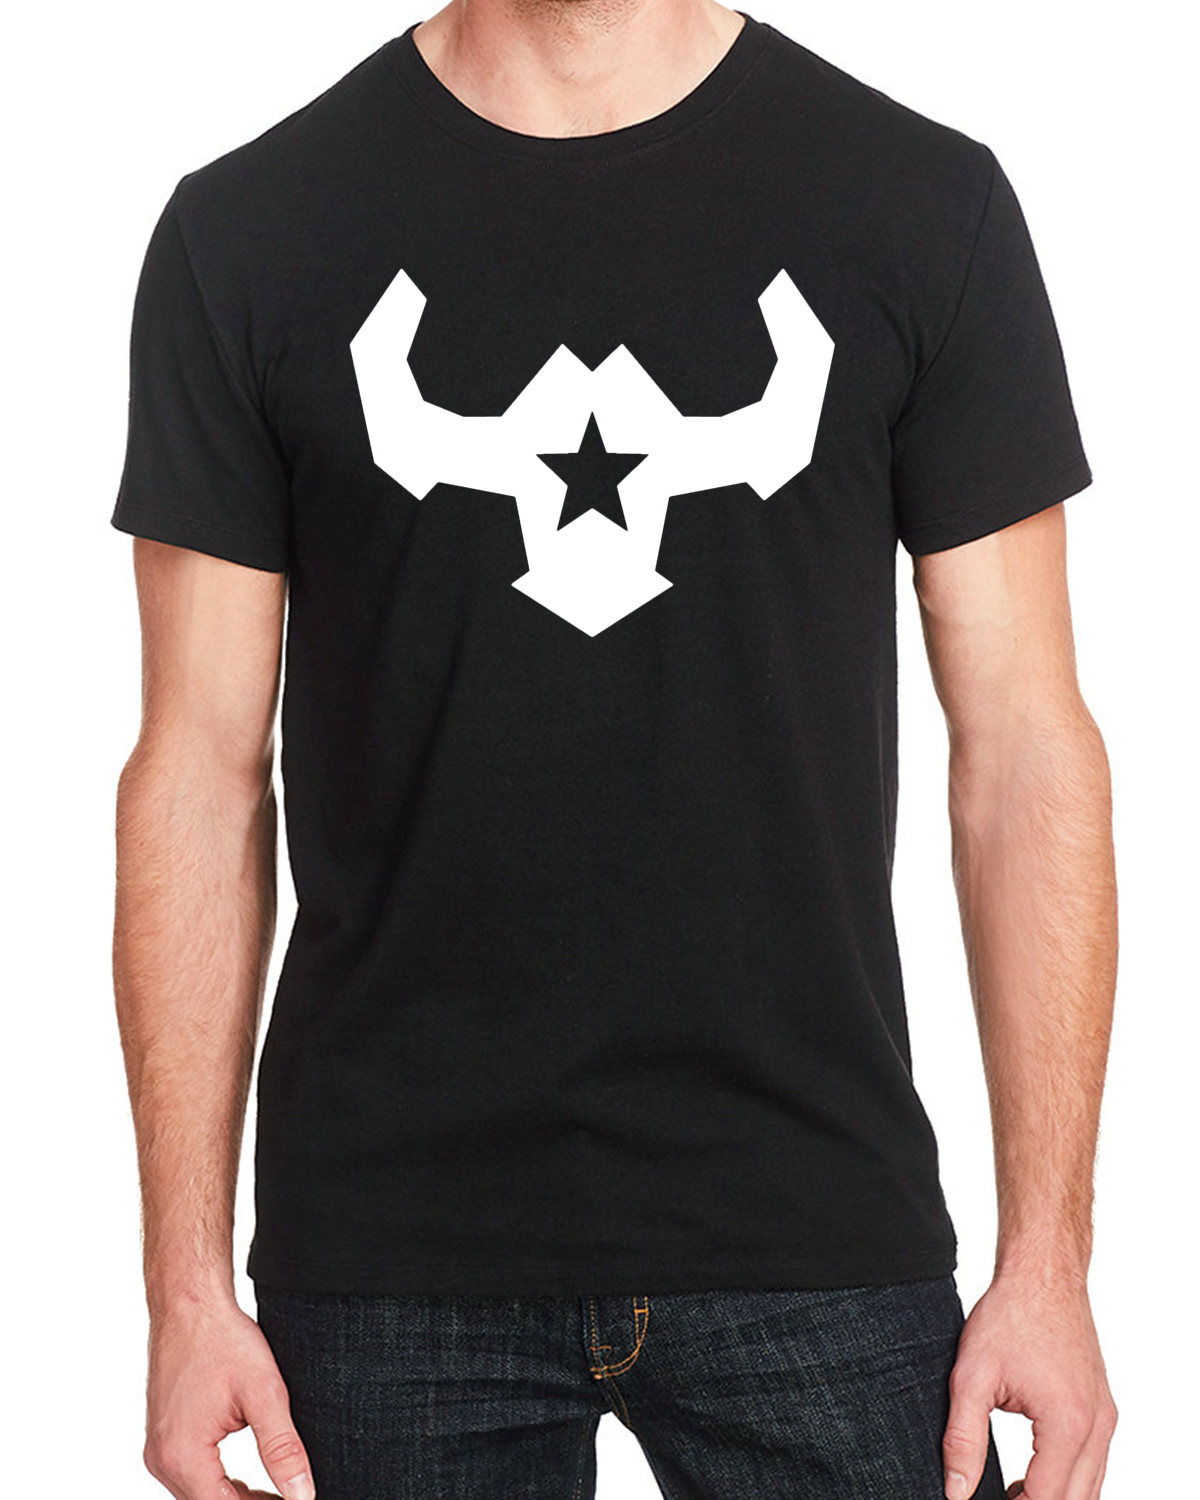 Original VQRO Bull Chest Emblem Black T-Shirt Affordable Custom Hats and Apparel